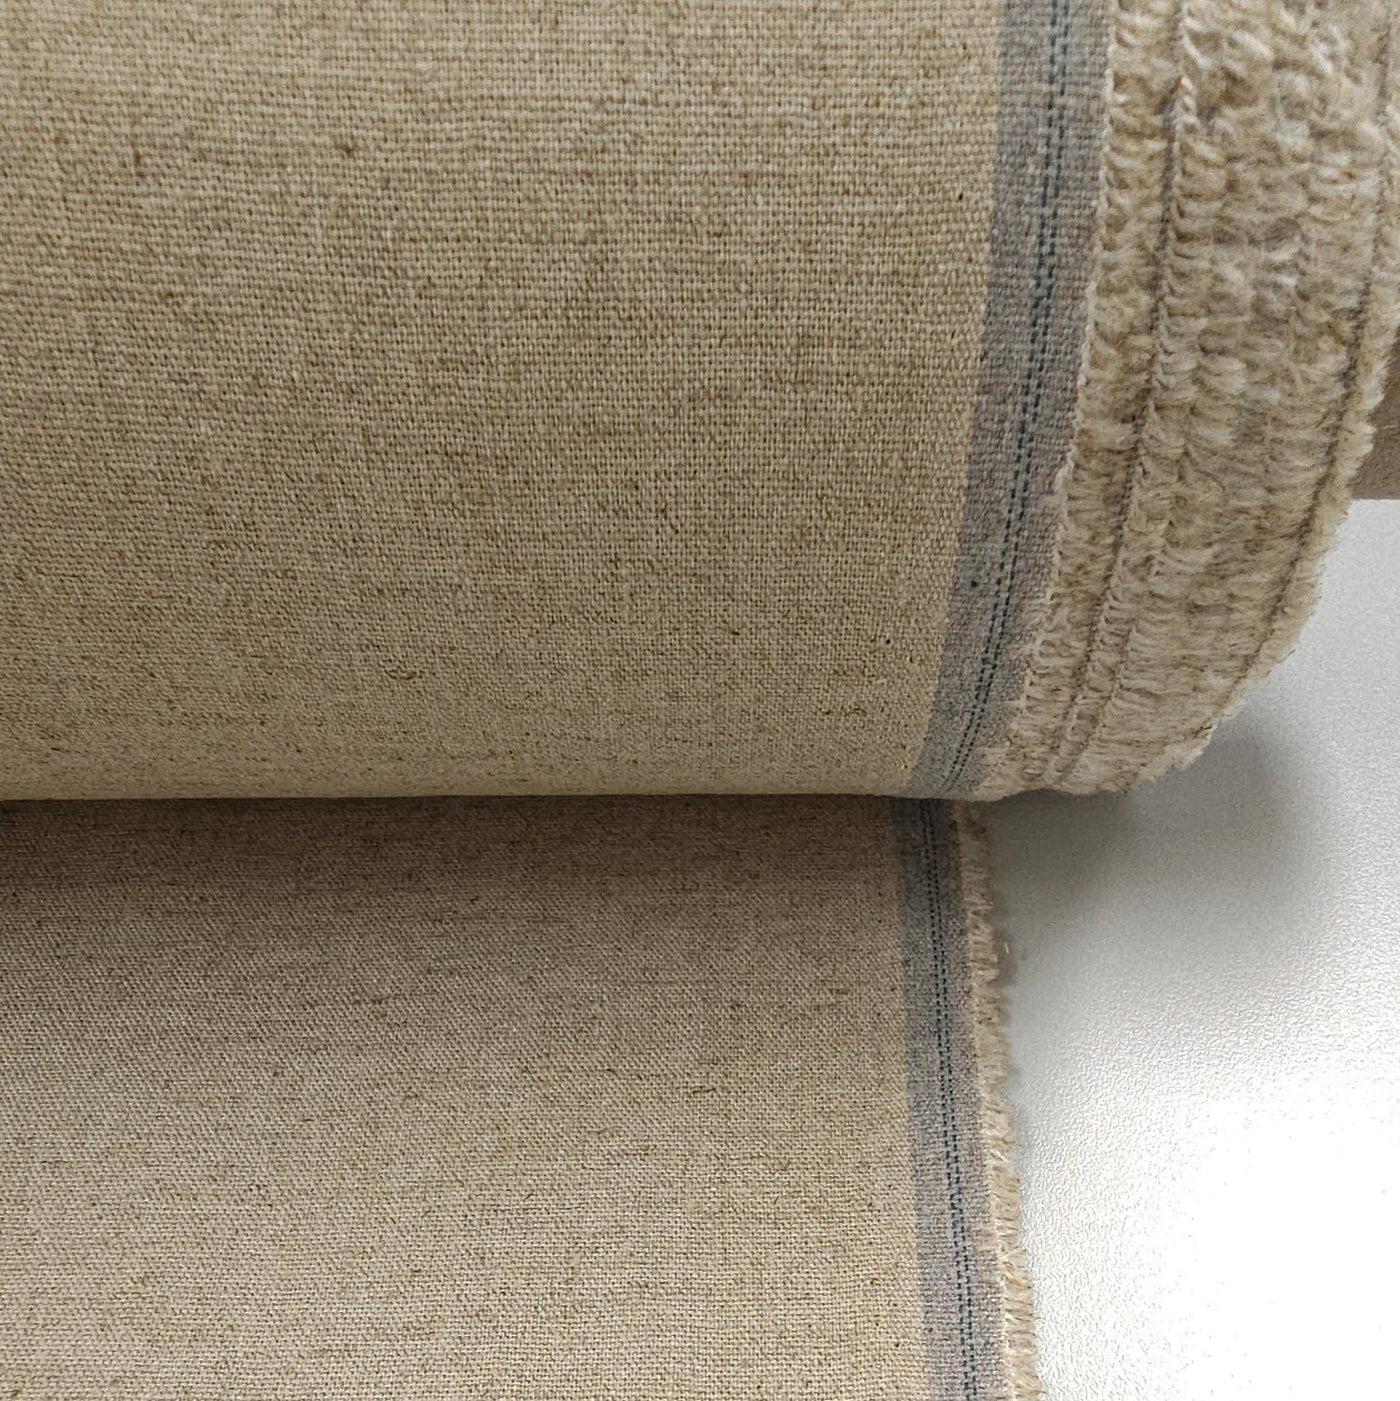 Stretch Rayon Linen Blend Fabric